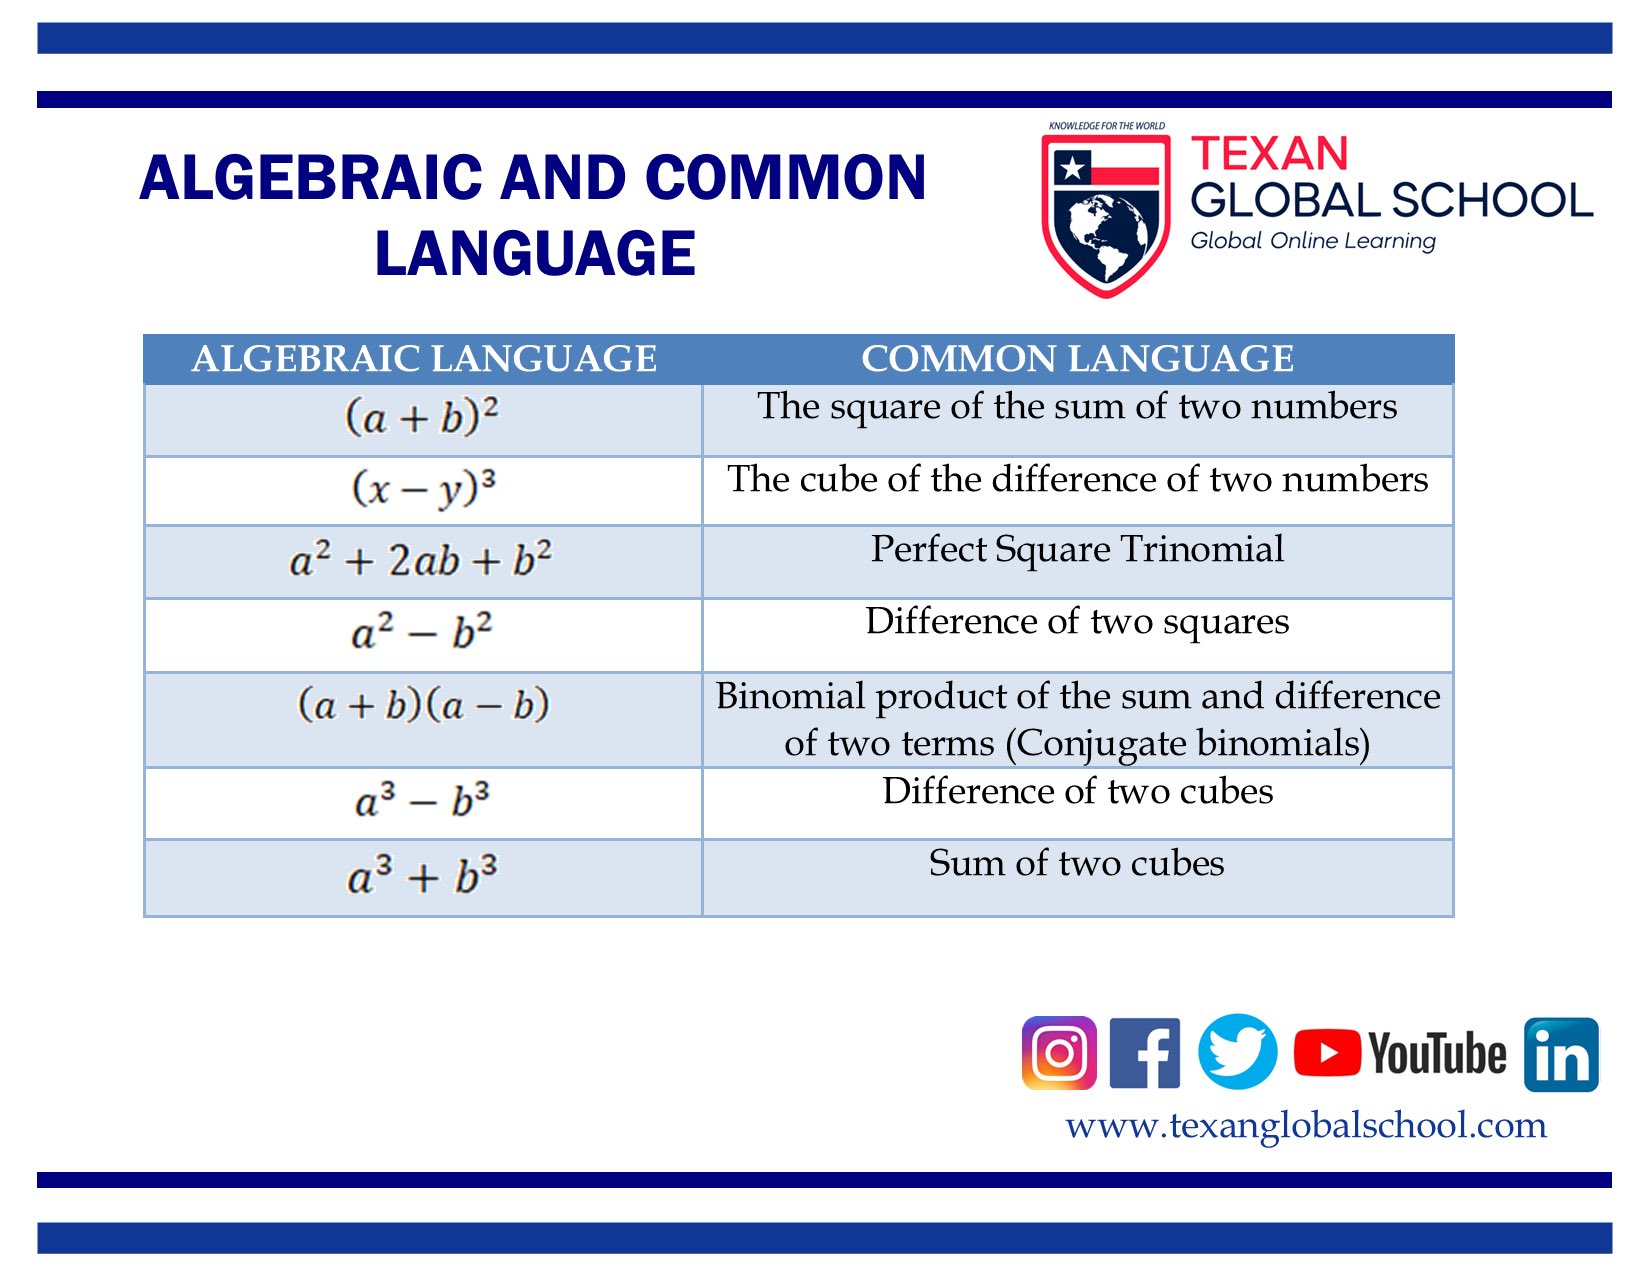 Algebraic and Common Language – Part 2